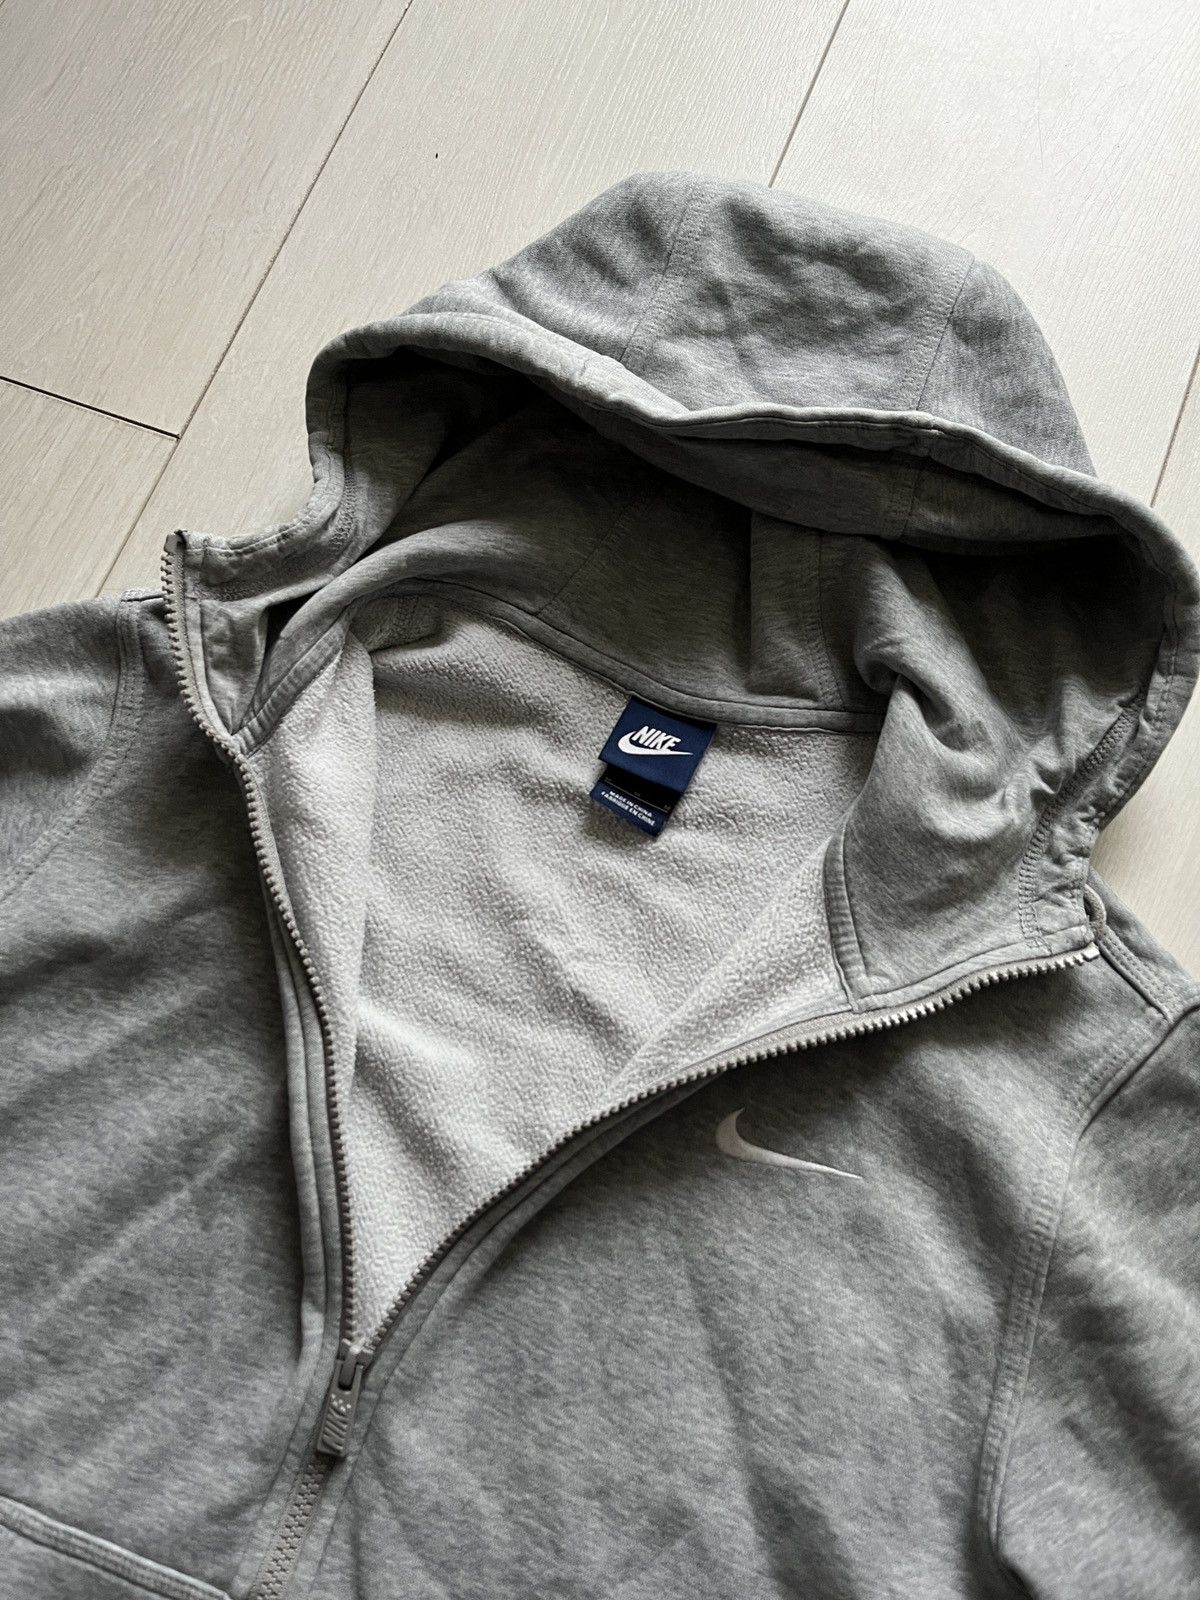 Nike Cintage Nike Faded mini swiosh zip hoodie y2k Size US M / EU 48-50 / 2 - 4 Preview